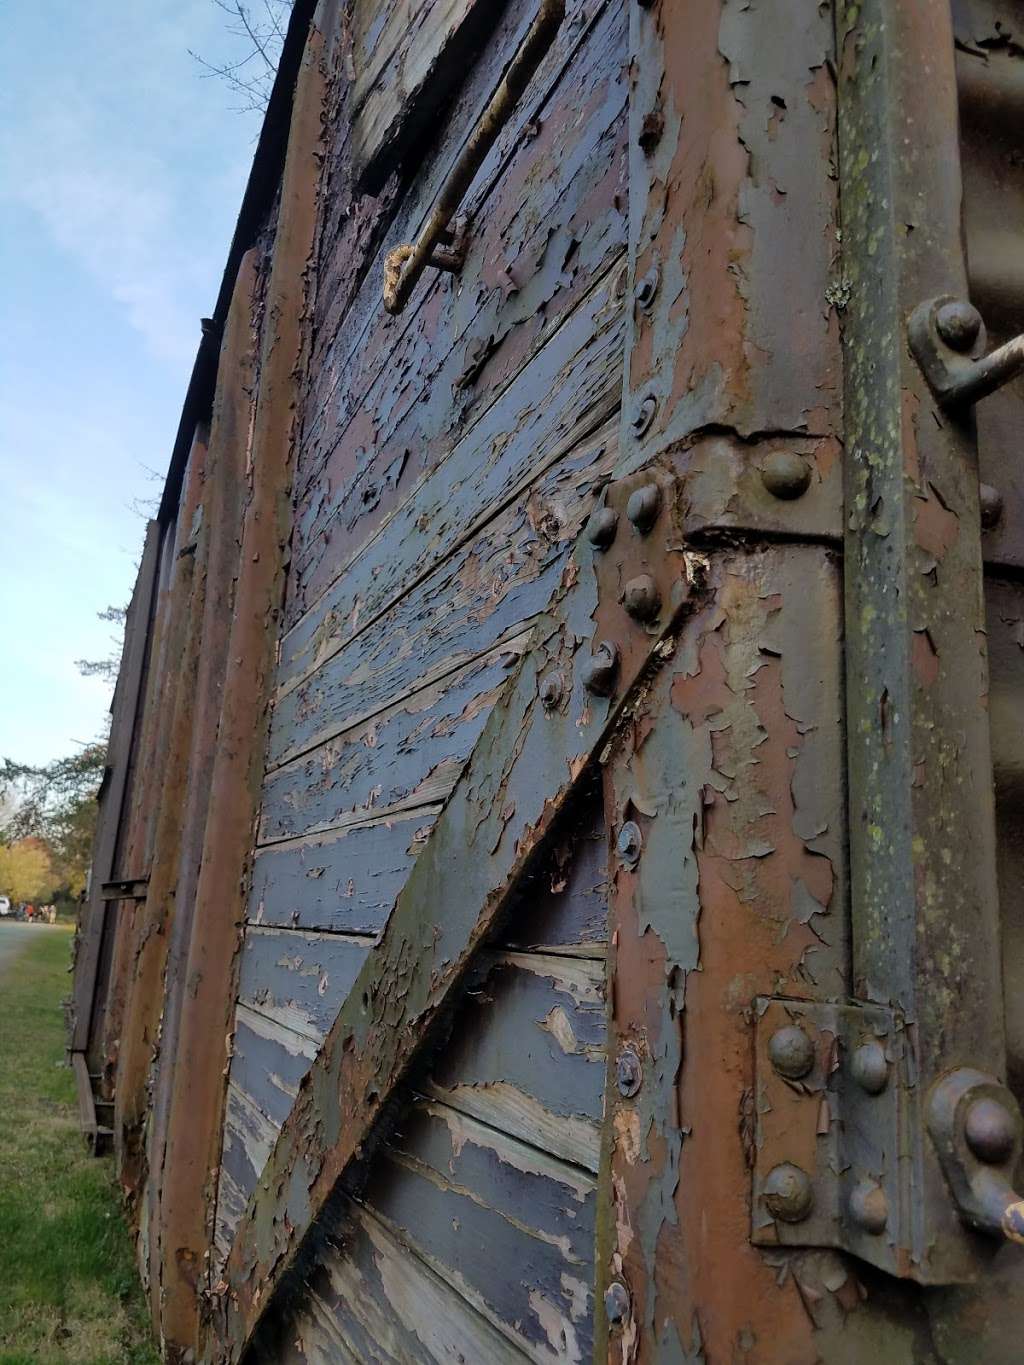 Dahlgren Railroad Heritage Trail | King George Rail Trail, King George, VA 22485, USA